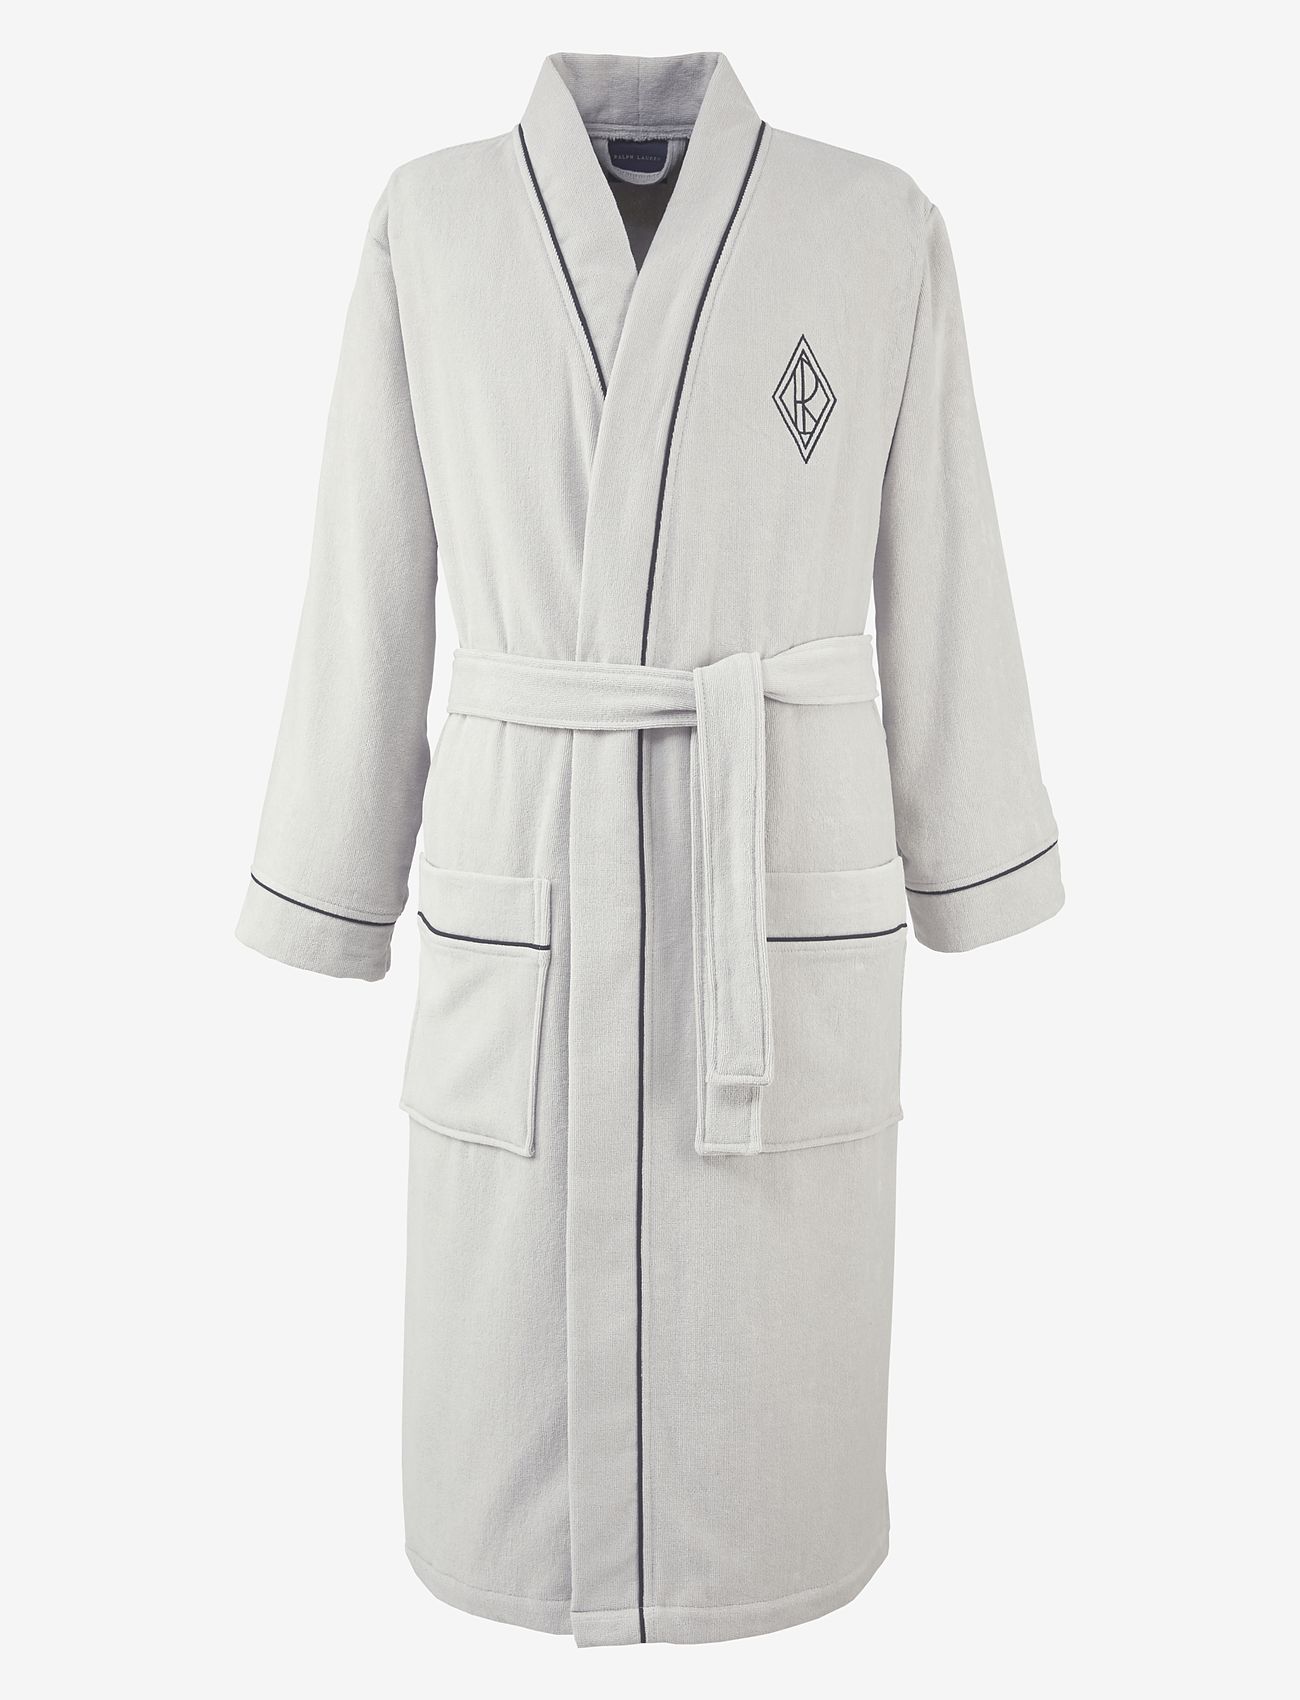 Ralph Lauren Home - PARKROW Bath robe - shop by price - stonewa - 1